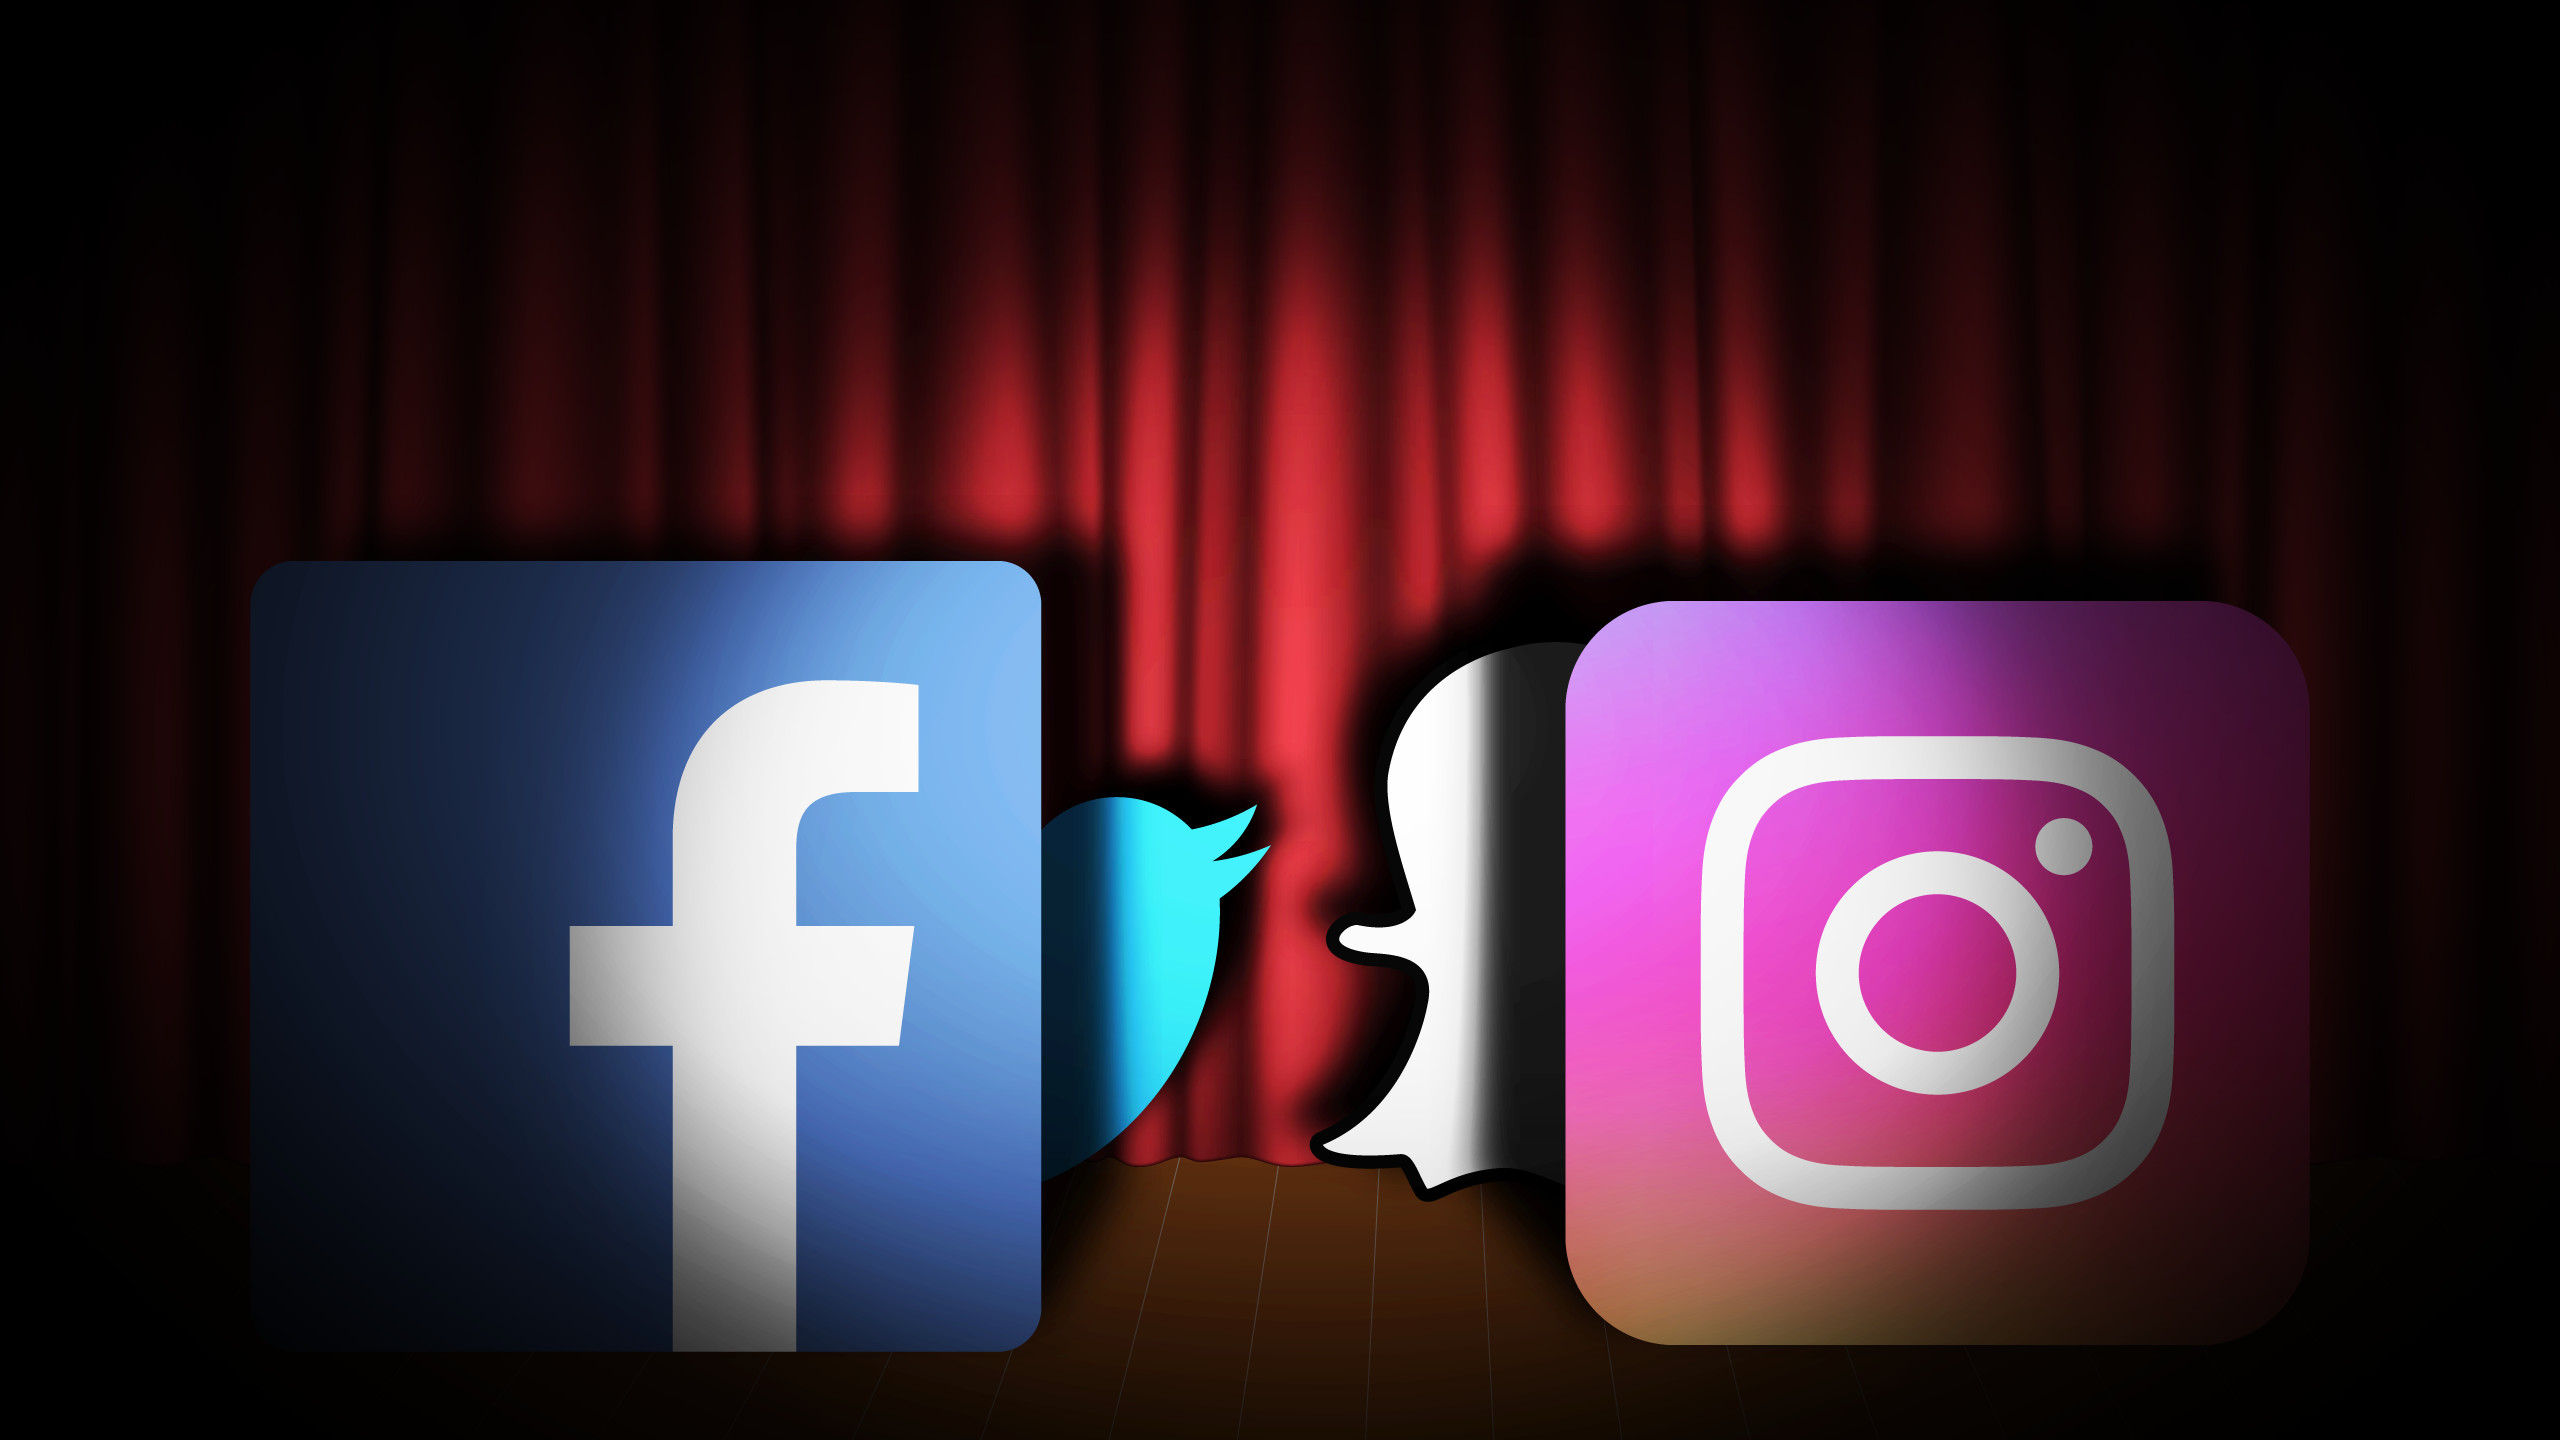 Instagram castrated Snapchat like Facebook neutered Twitter TechCrunch